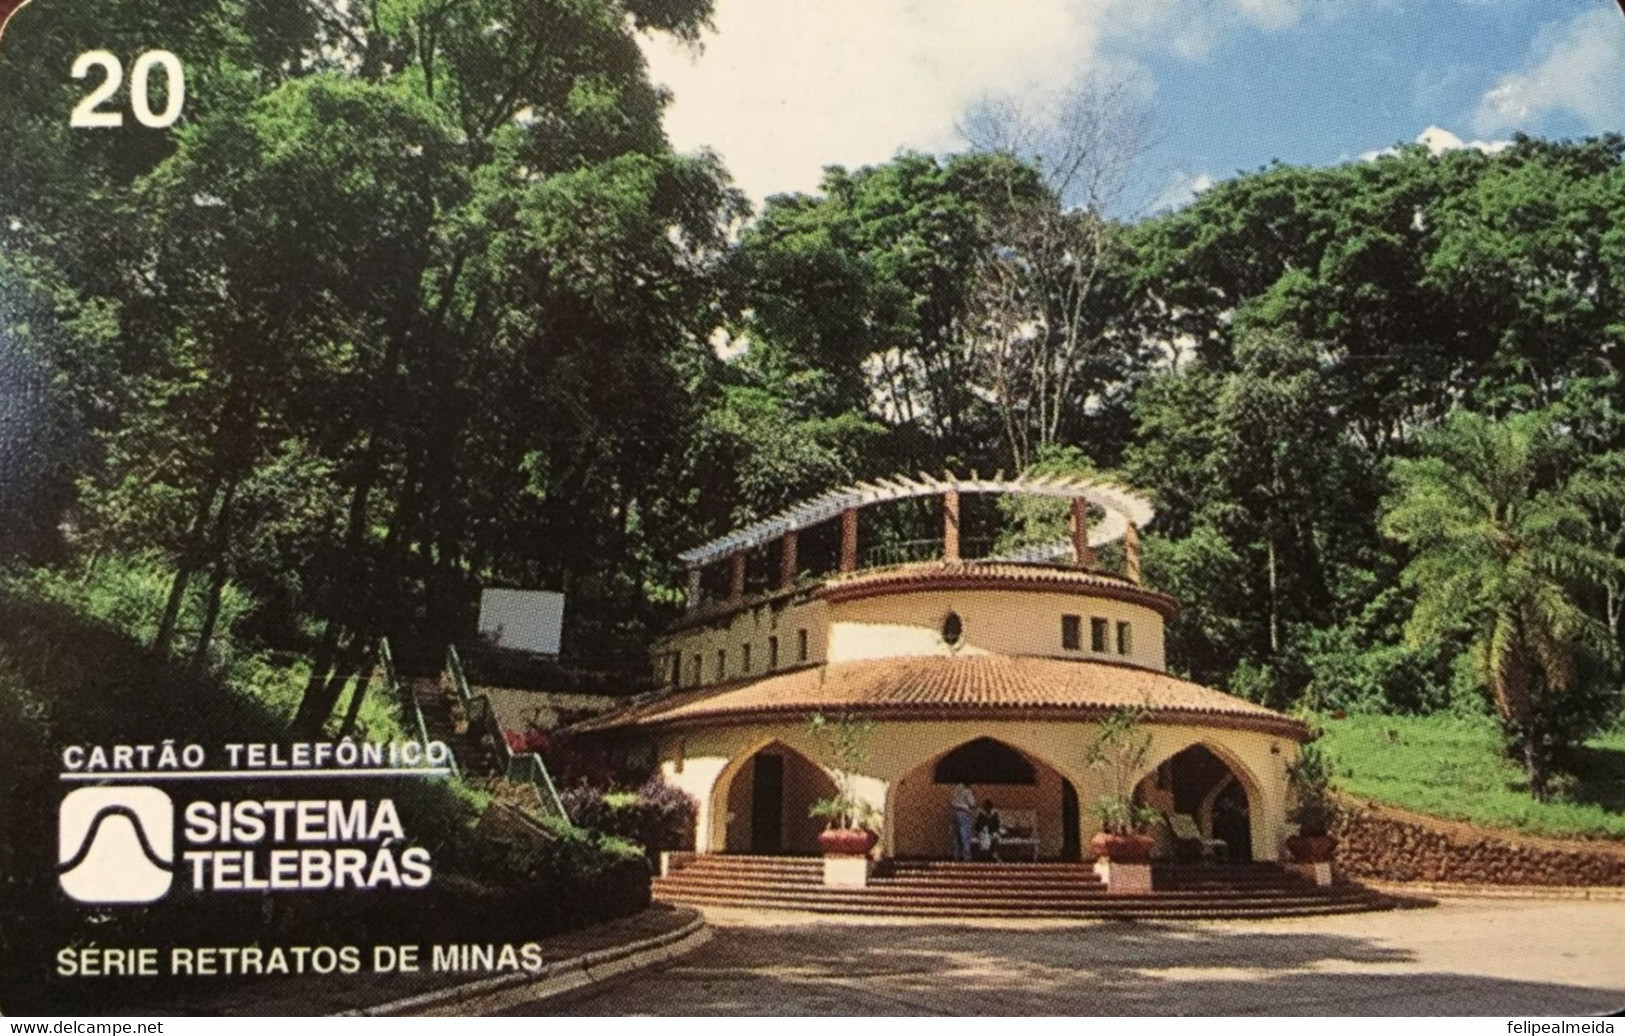 Rare Phone Card Produced By Telebras In 1998 - Series Retratos De Minas - Image Fonte Do Beja In Araxá - Minas Gerais - - Culture